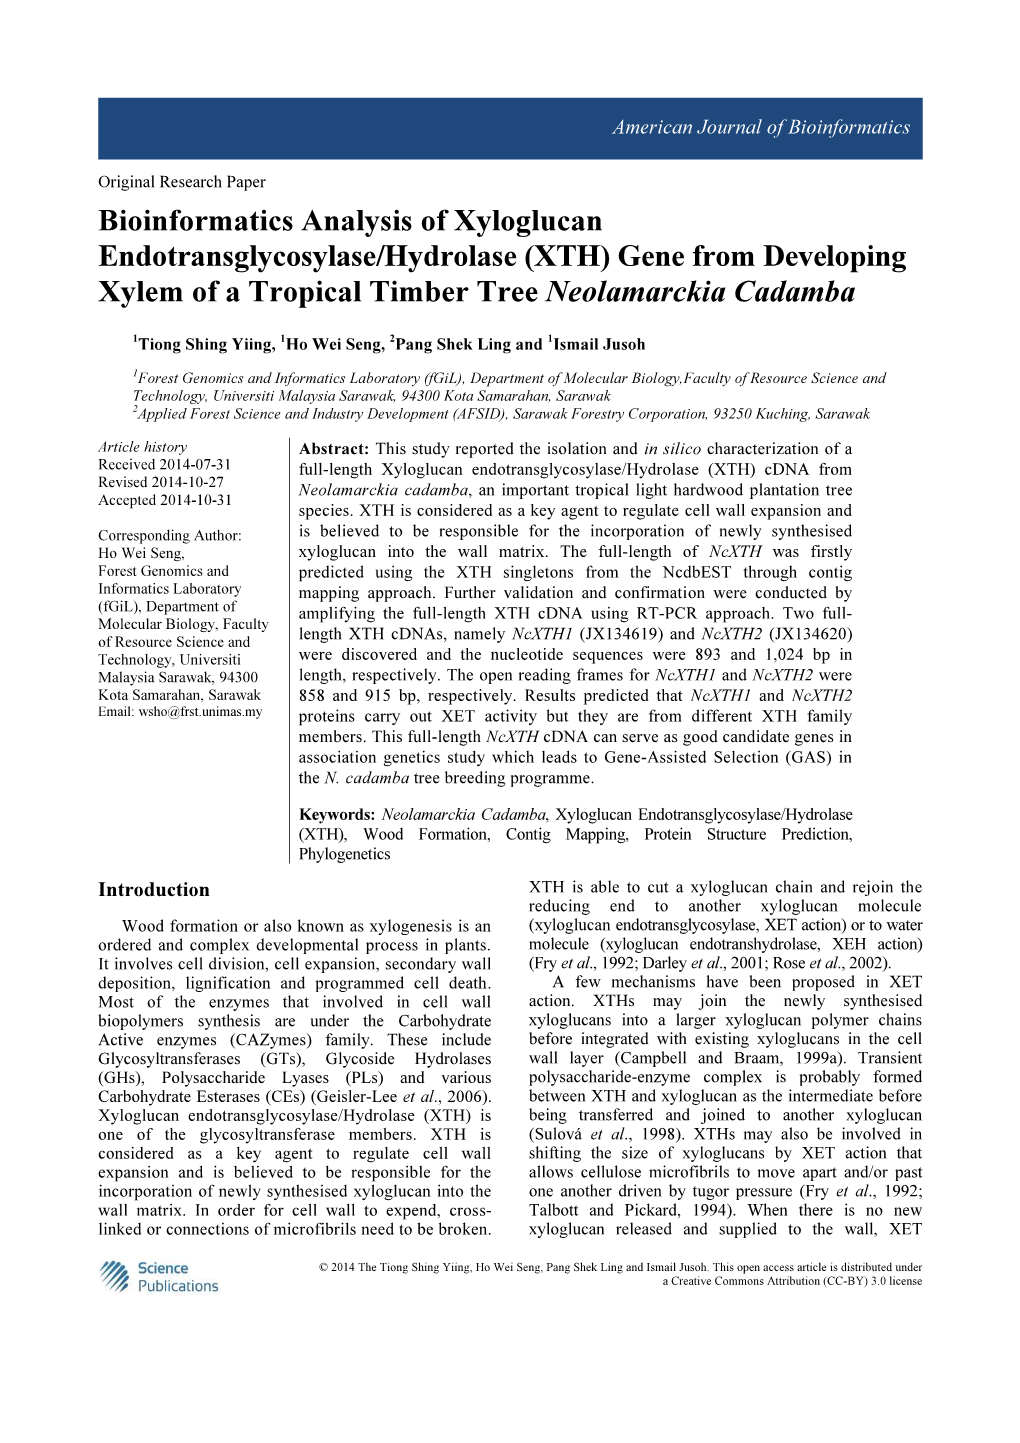 Bioinformatics Analysis of Xyloglucan Endotransglycosylase/Hydrolase (XTH) Gene from Developing Xylem of a Tropical Timber Tree Neolamarckia Cadamba